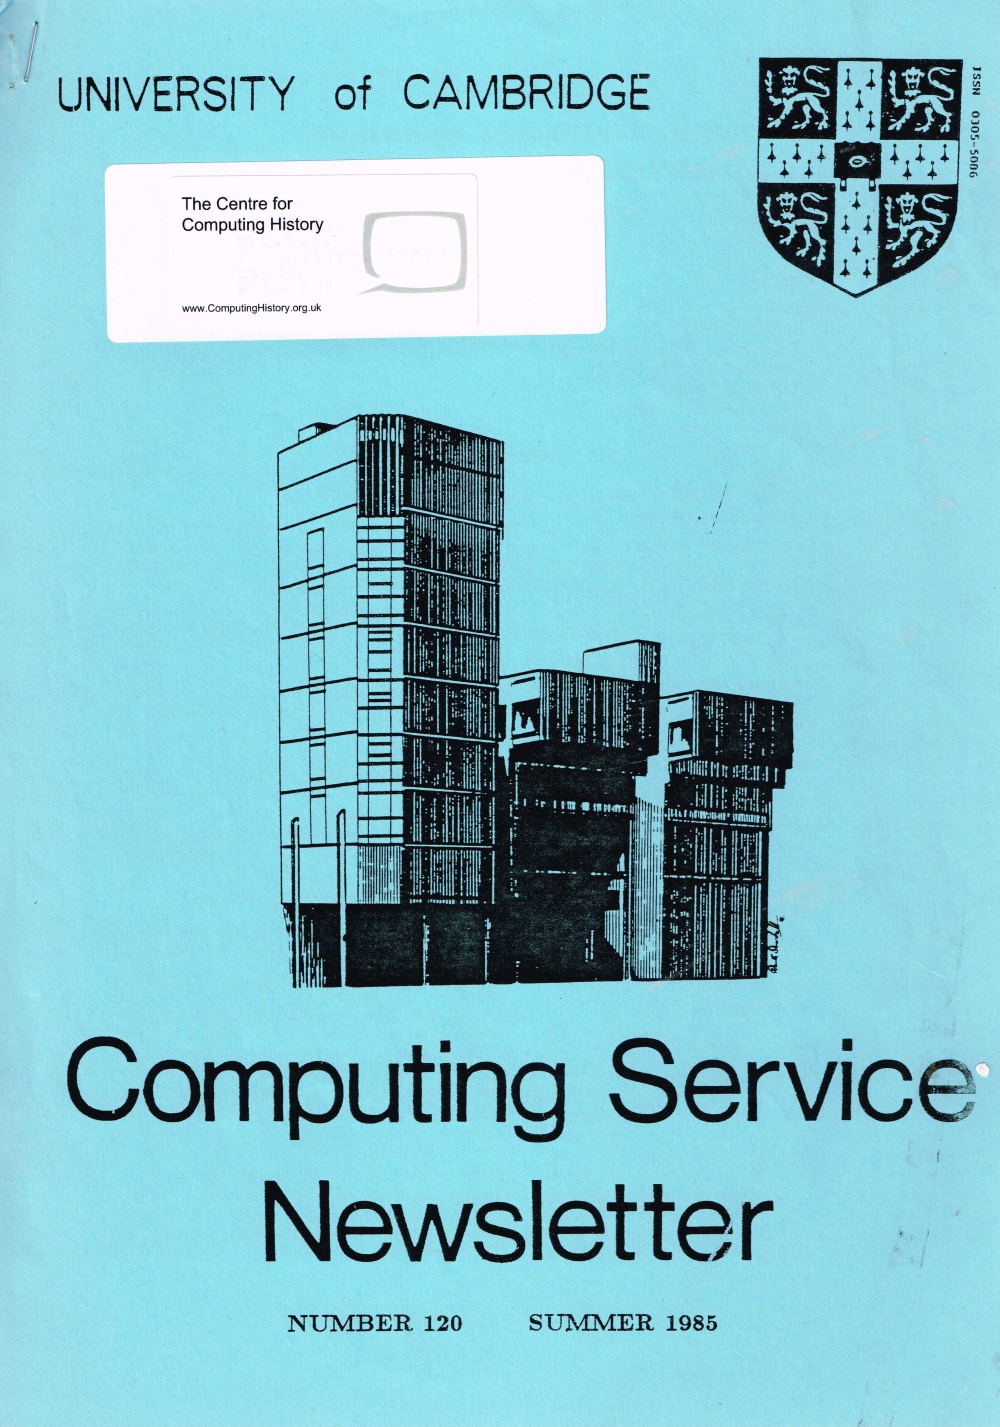 Article: University of Cambridge Computing Service Summer 1985 Newsletter 120